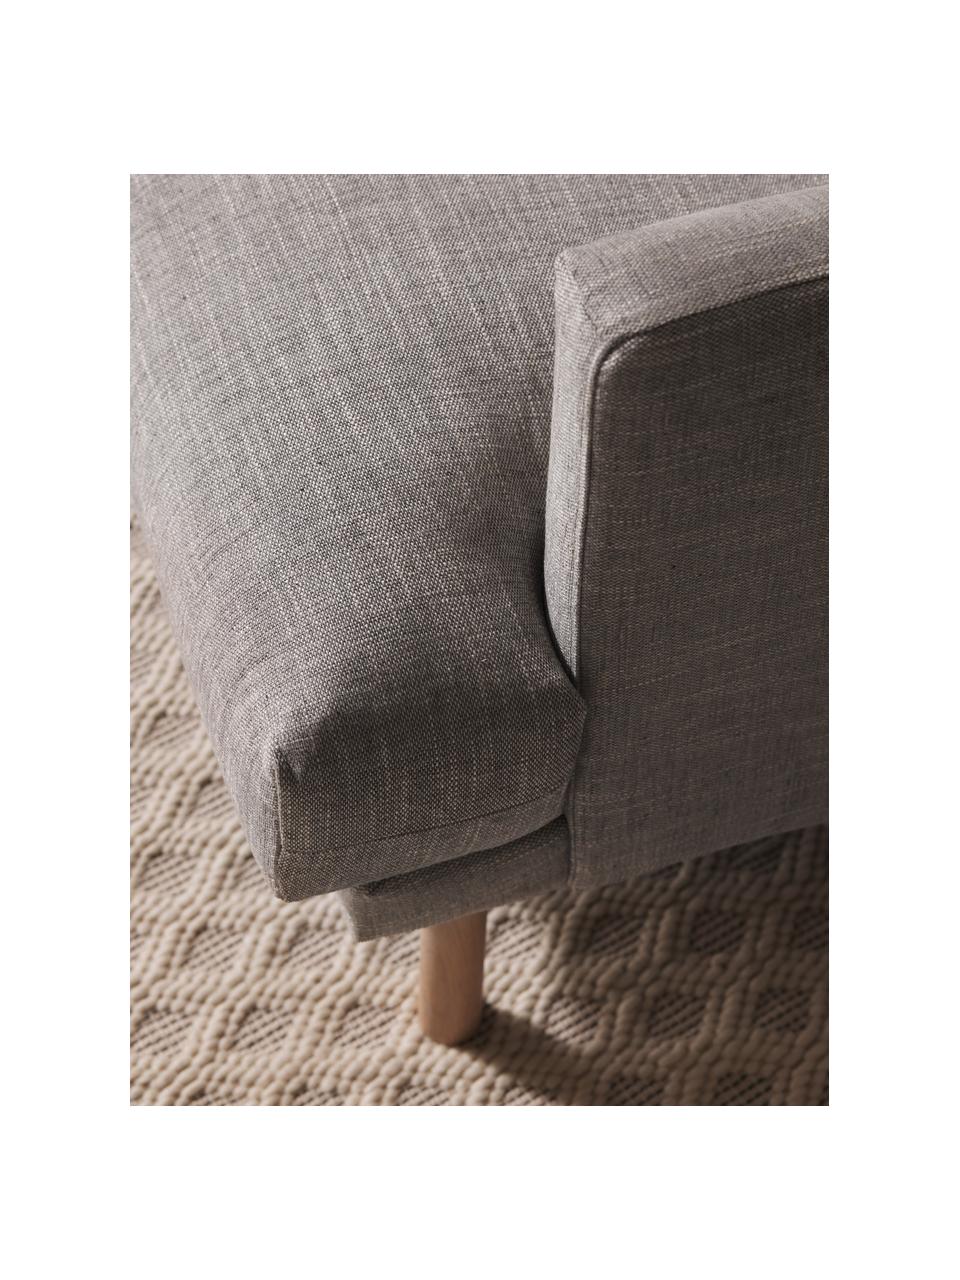 Fauteuil lounge Adrian, Tissu gris clair, larg. 90 x prof. 95 cm